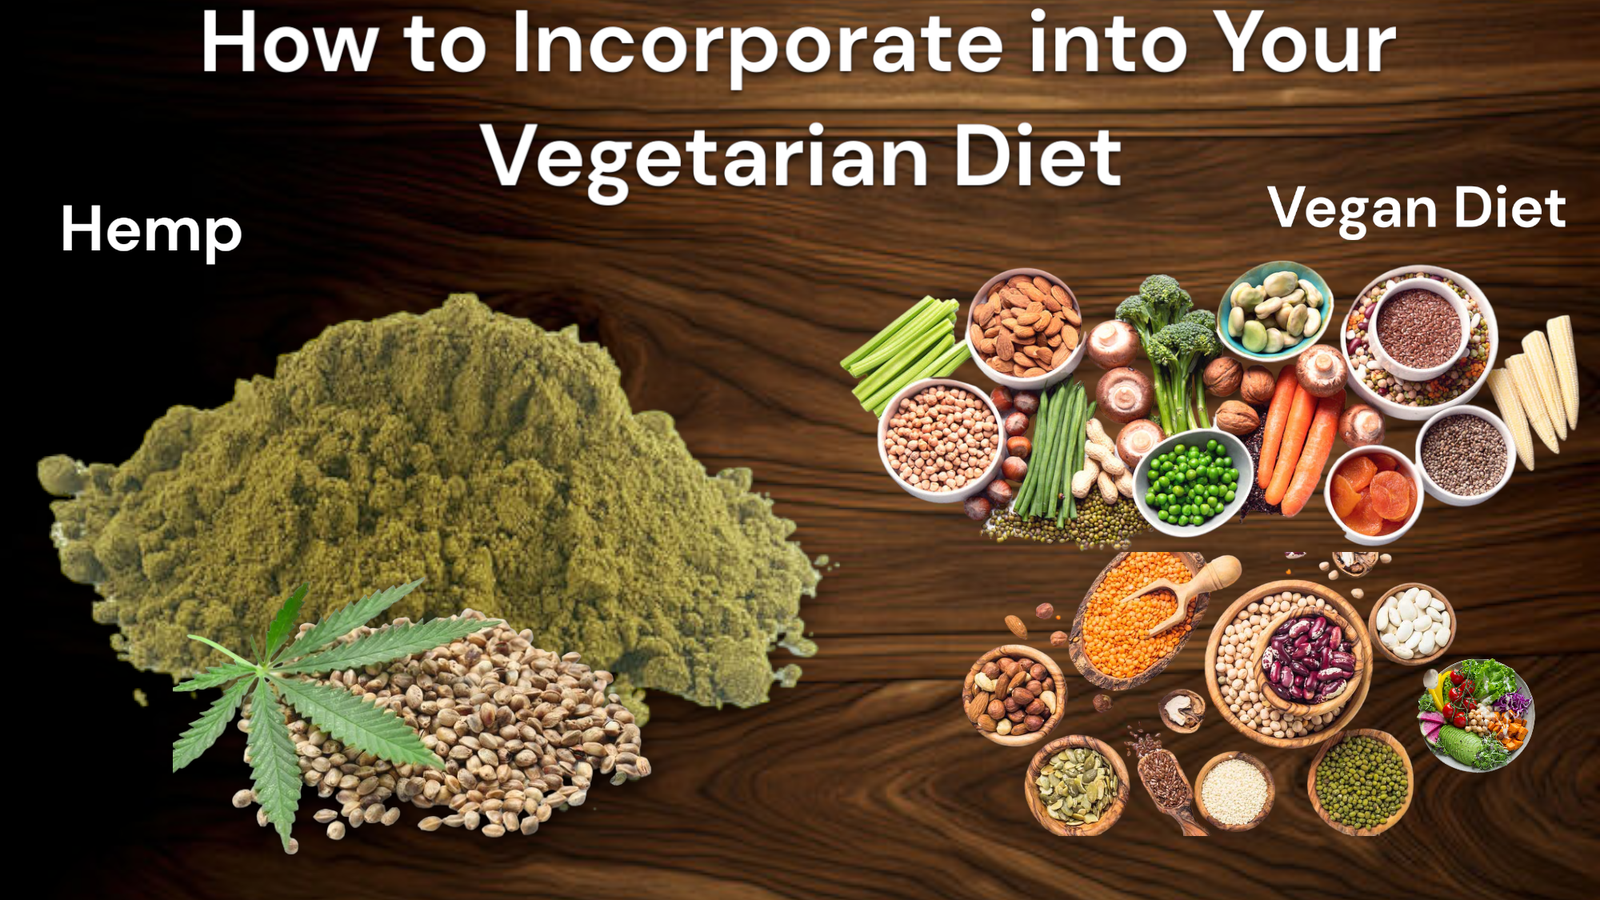 How to Incorporate Hemp into Your Vegetarian or Vegan Diet